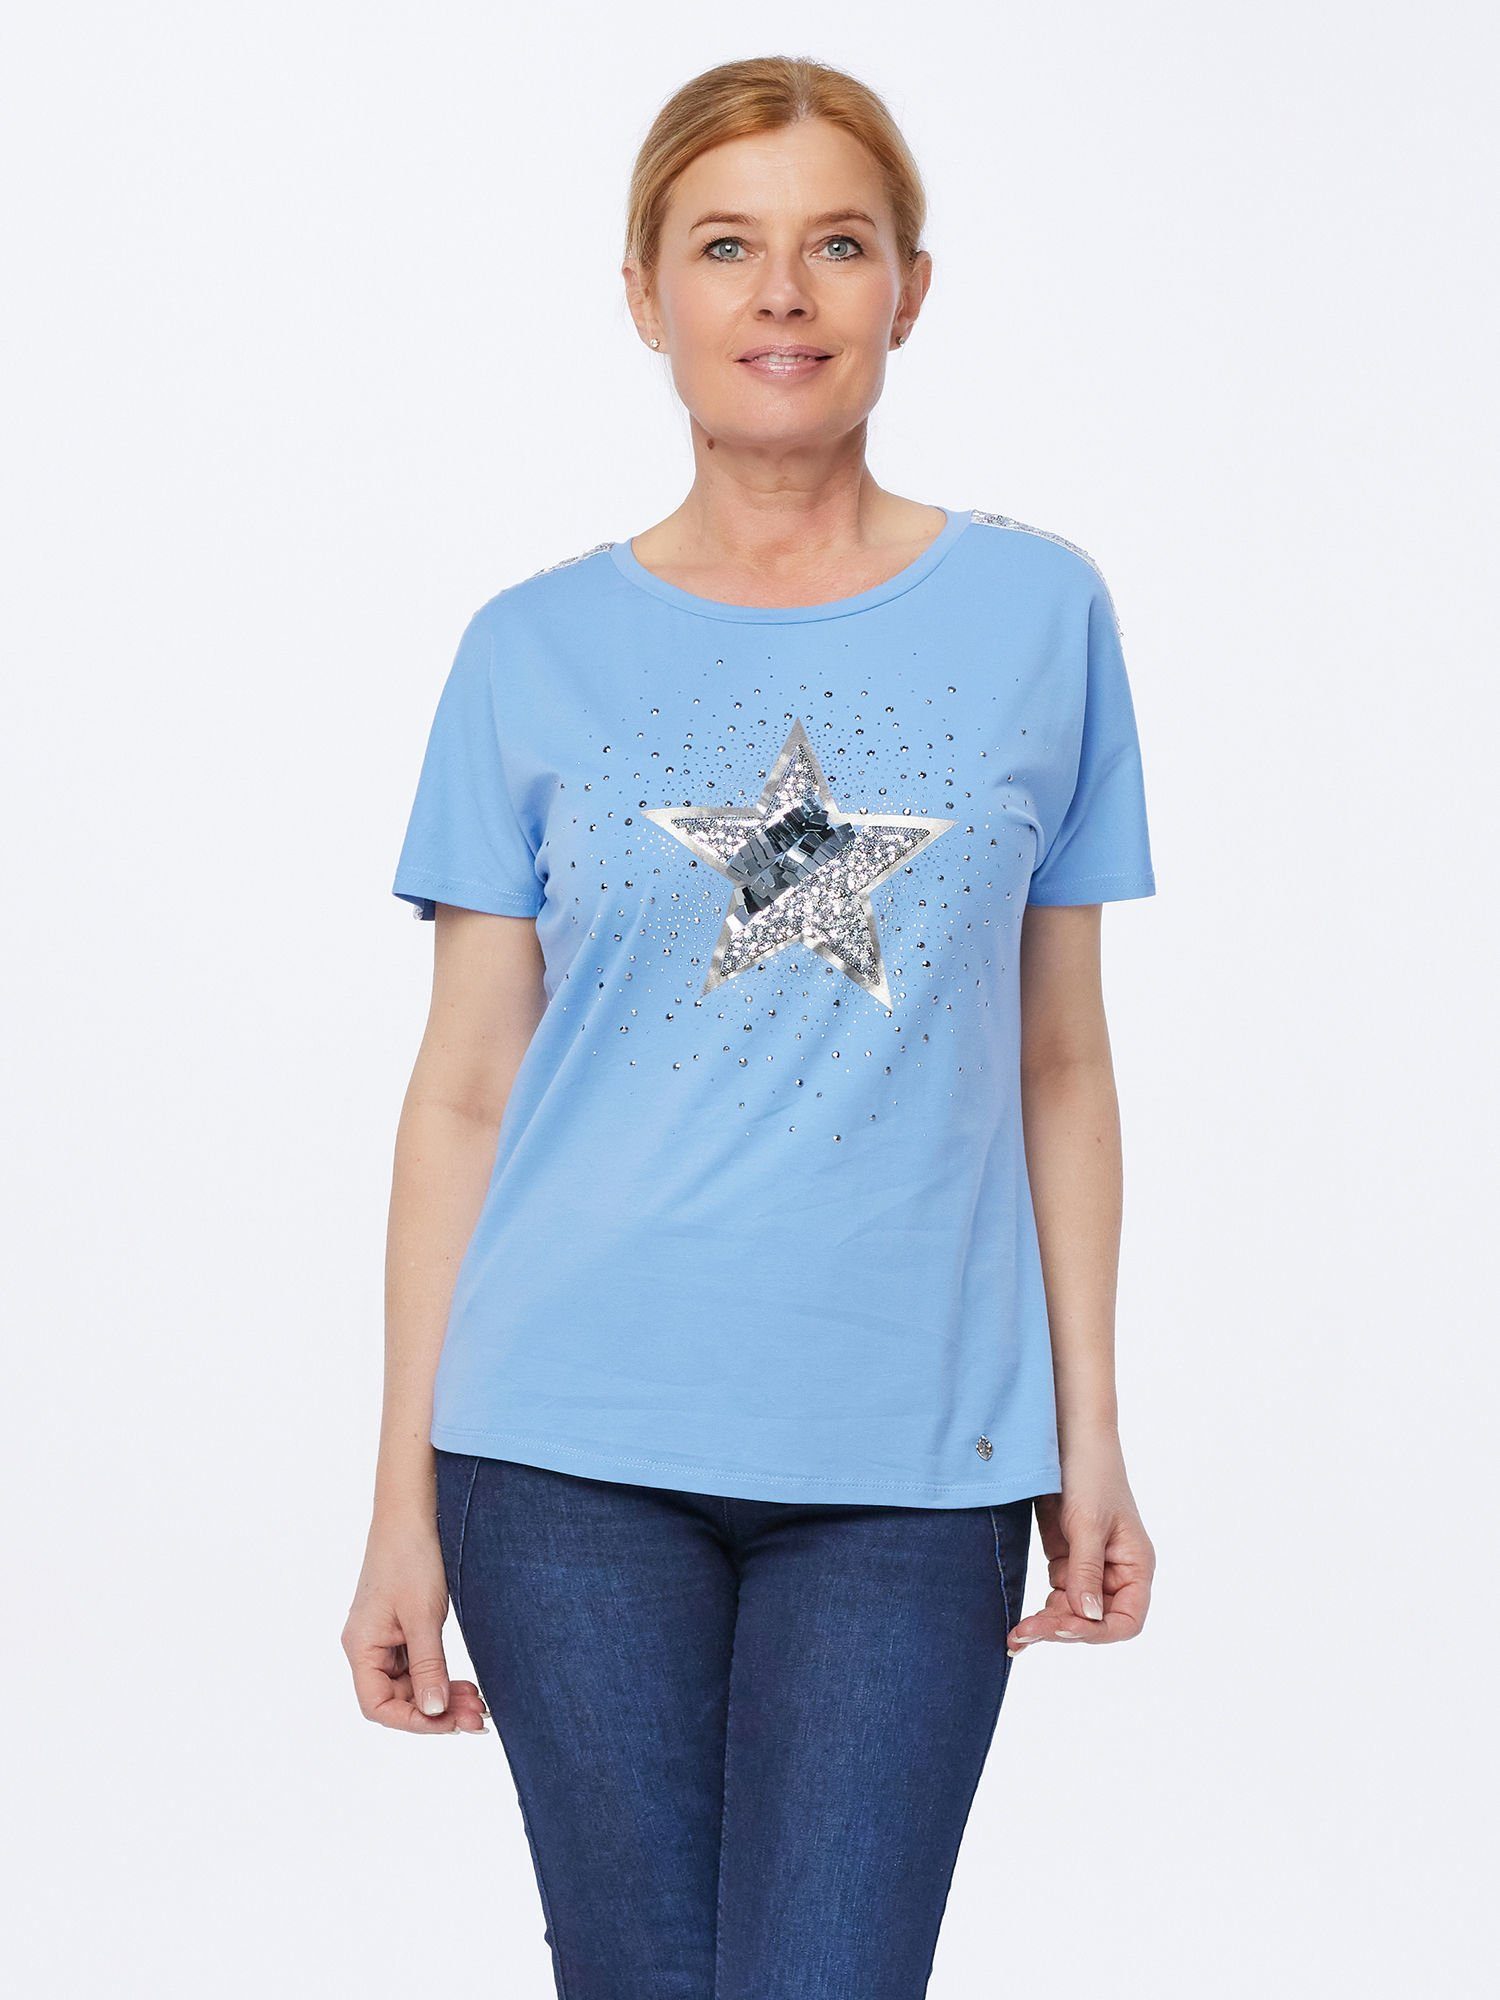 Christian Materne T-Shirt Kurzarmbluse Stern-Motiv blau mit